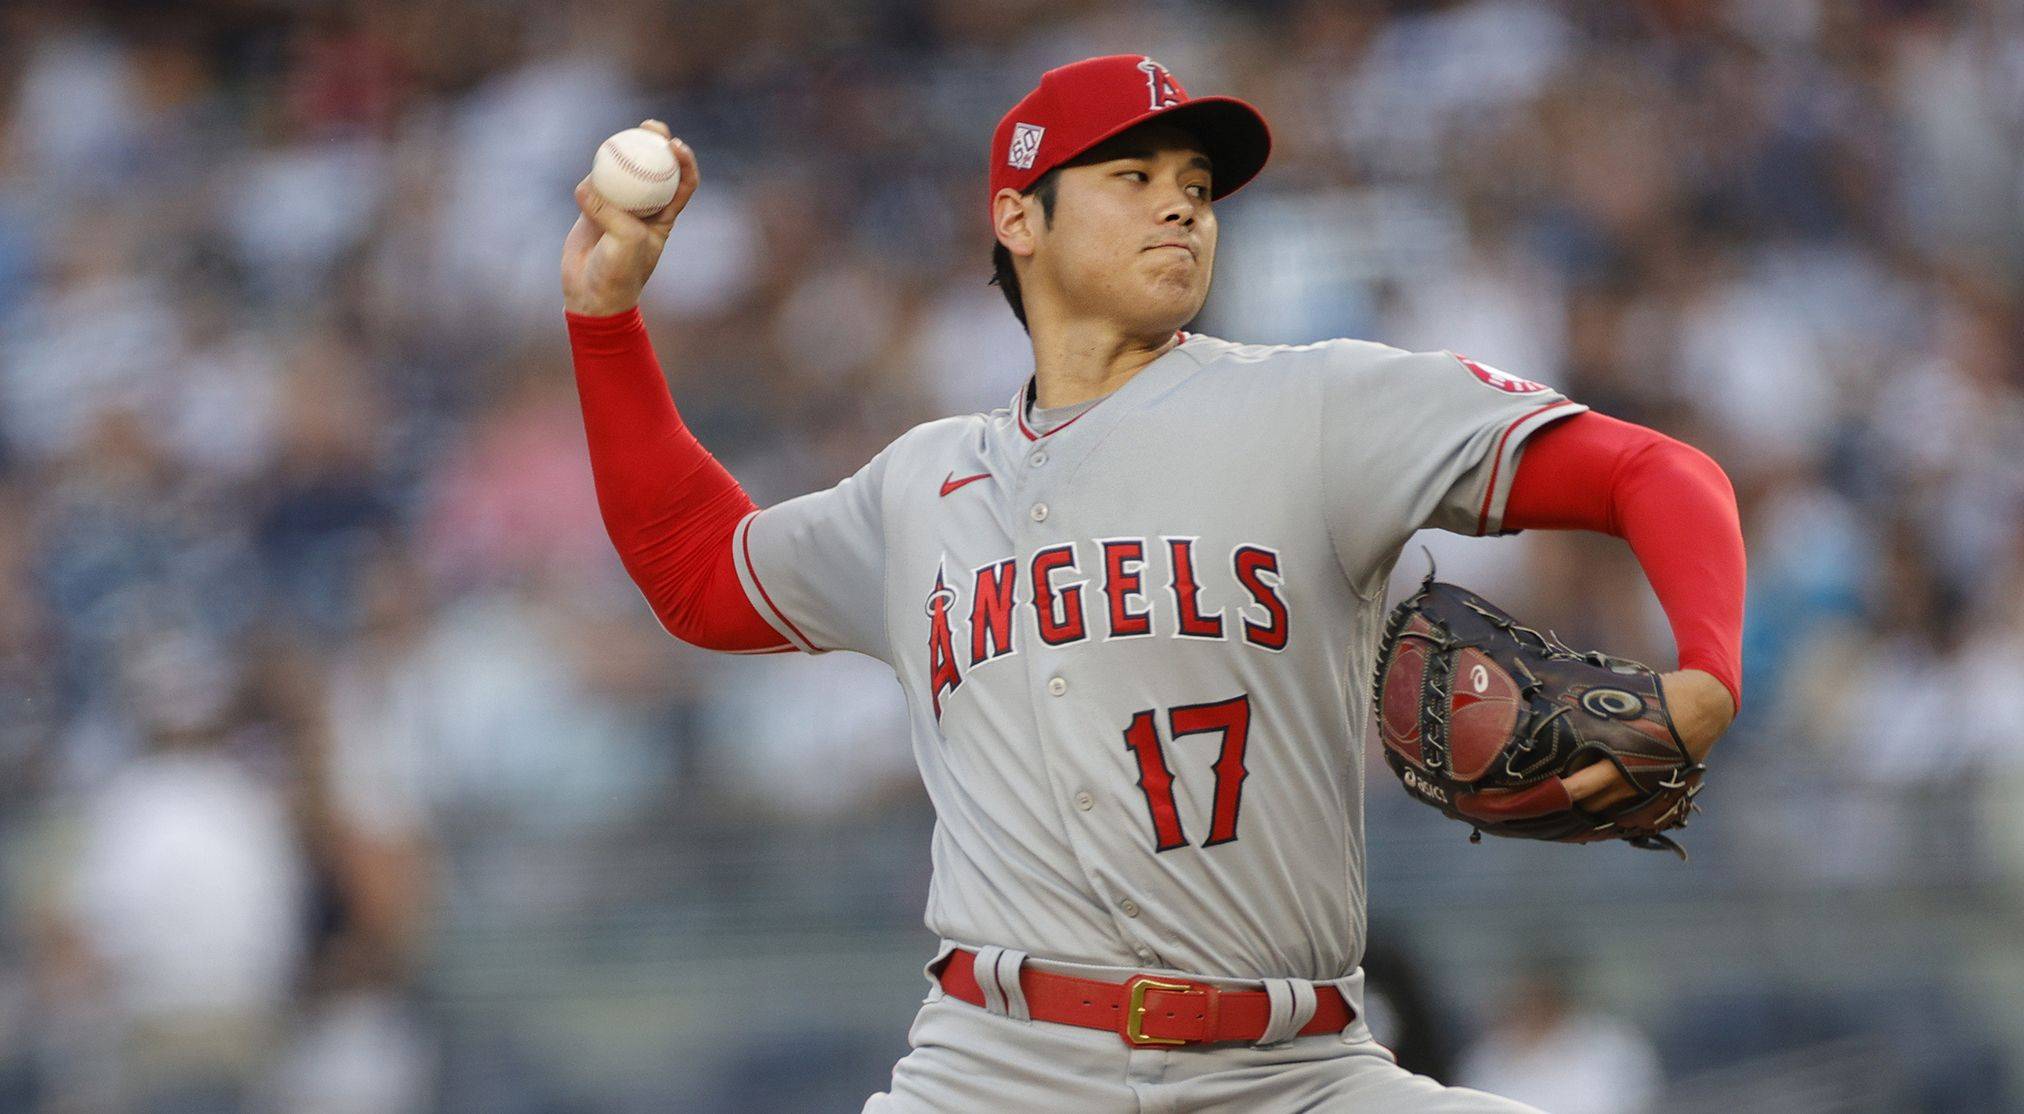 Shohei Ohtani's baseball skills help his sponsors outperform the market -  The Japan Times